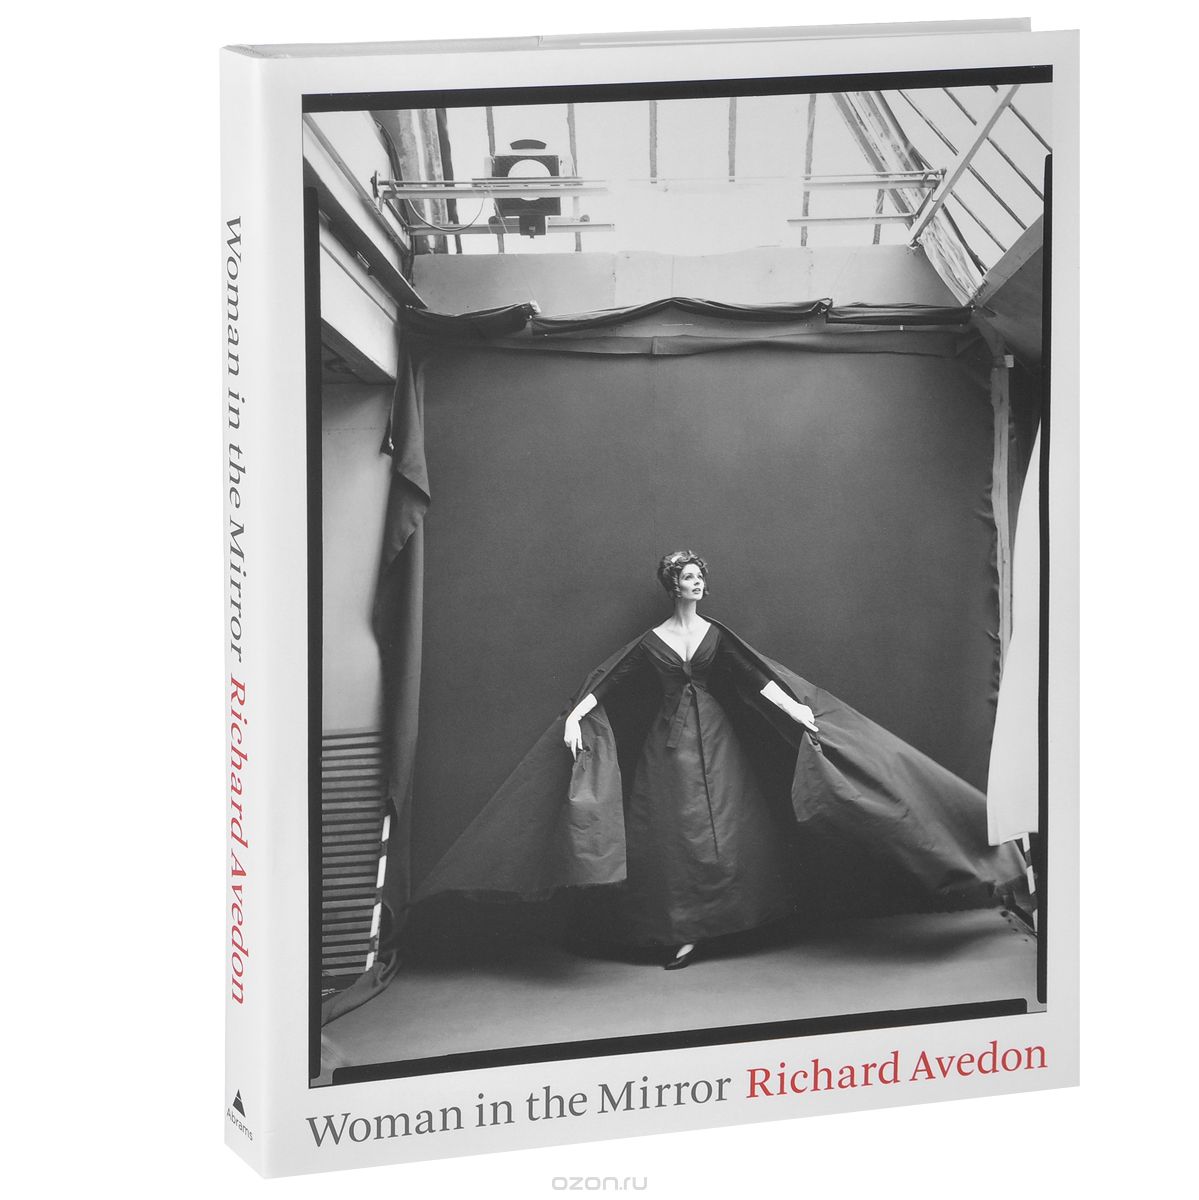 Скачать книгу "Woman in the Mirror, Richard Avedon"